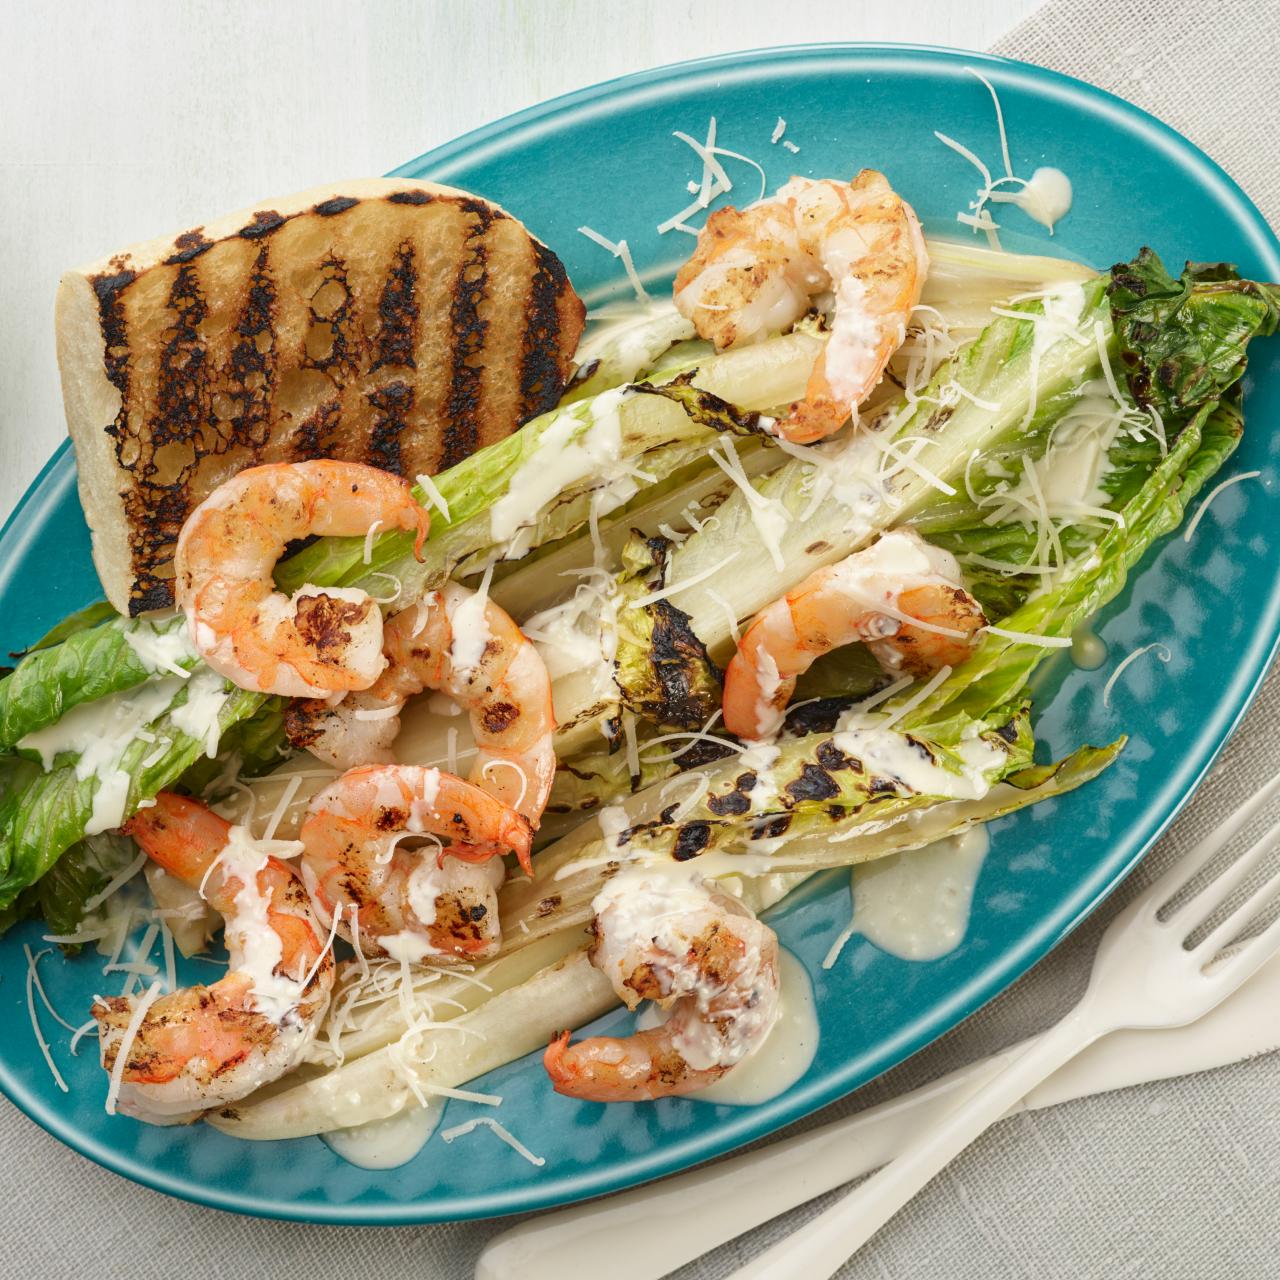 https://food.fnr.sndimg.com/content/dam/images/food/fullset/2014/5/12/0/FNK_Grilled-Caesar-Salad-with-Shrimp_s4x3.jpg.rend.hgtvcom.1280.1280.suffix/1400003306735.jpeg